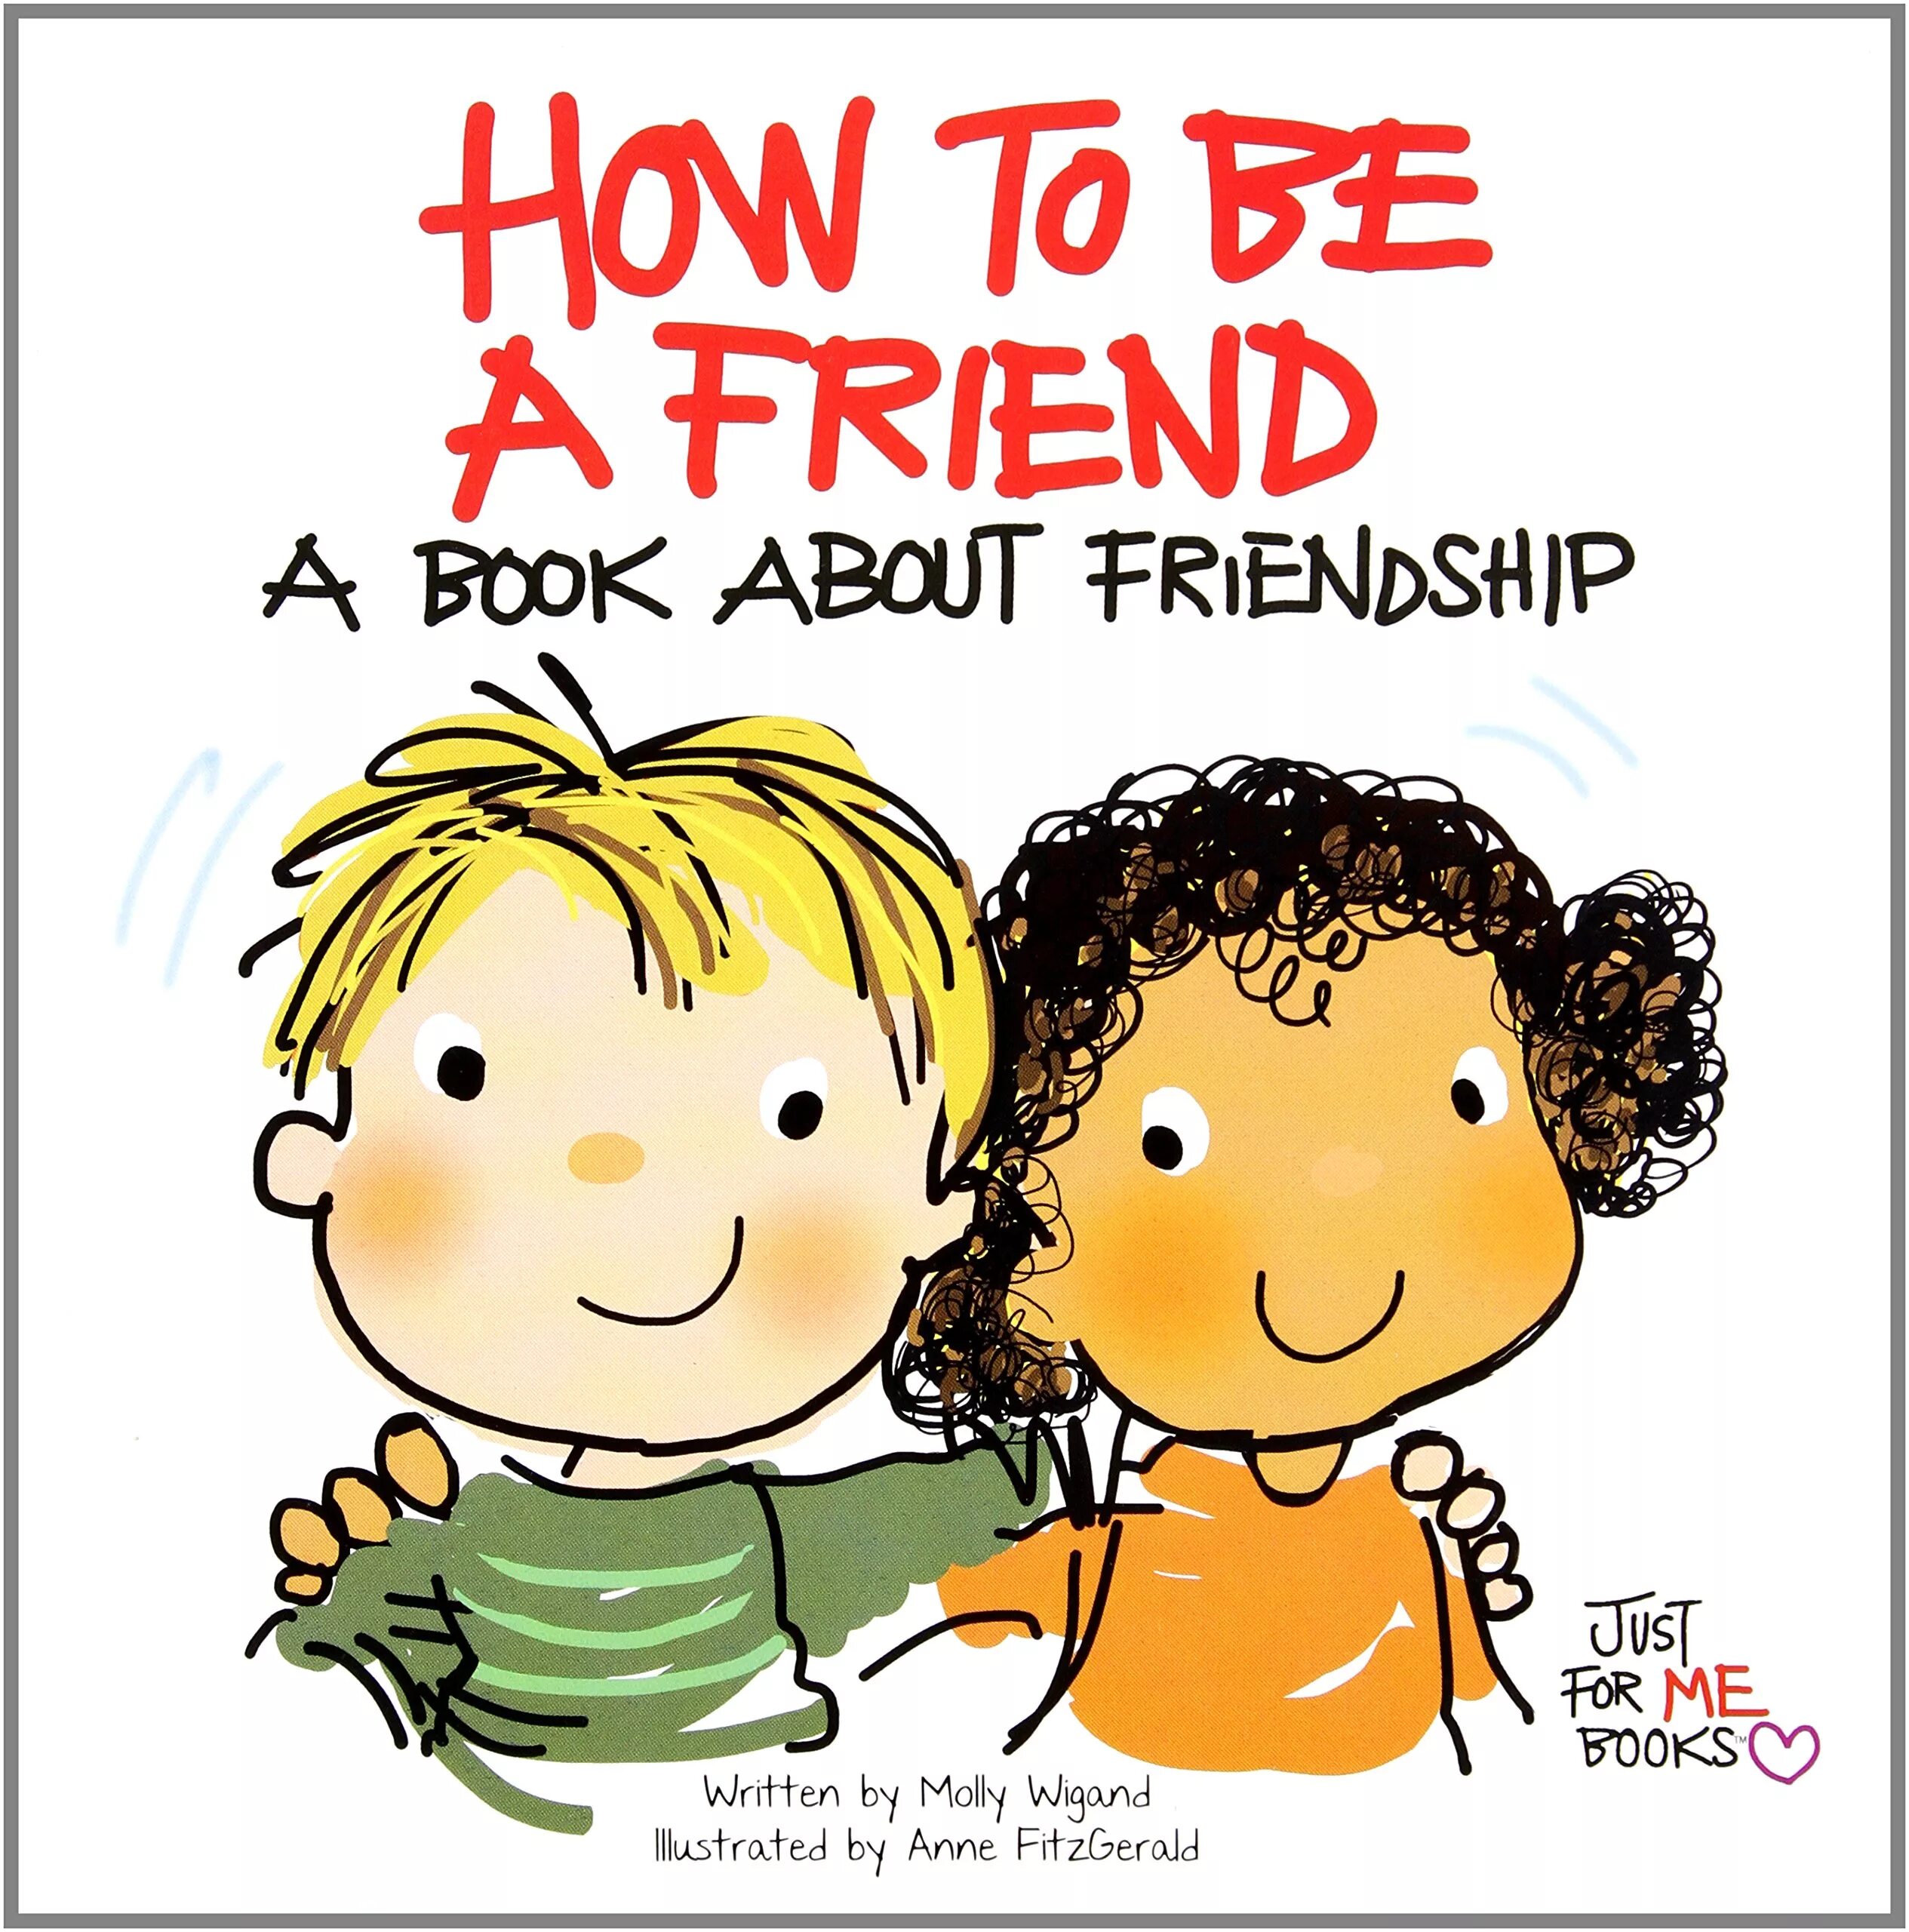 My best friend my books. Книга друг. The friends. Be a friend. Книги о дружбе.